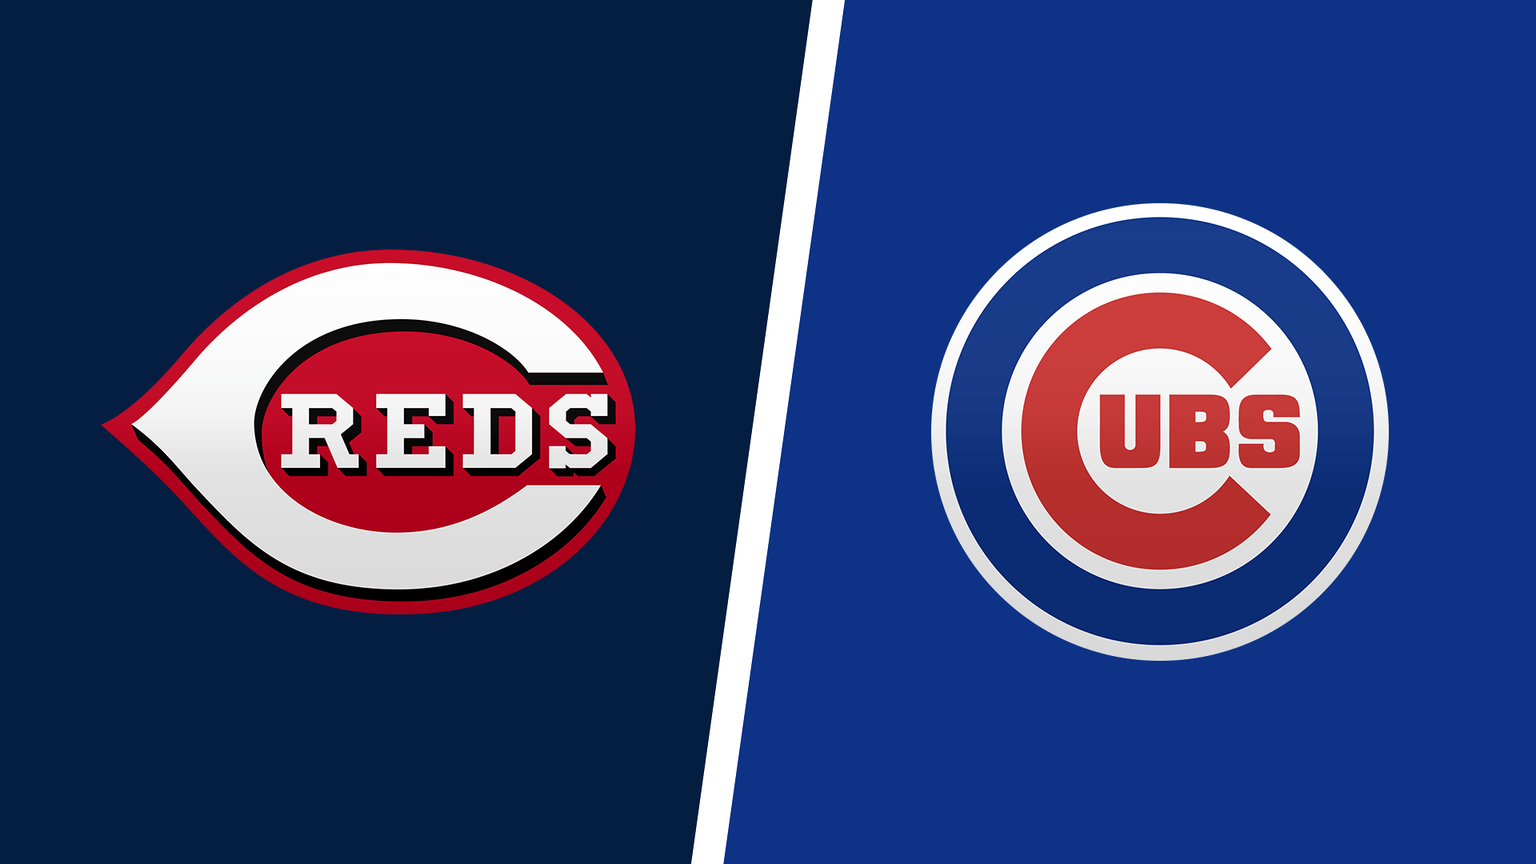 How to Watch Chicago Cubs vs. Cincinnati Reds Live Online on October 4